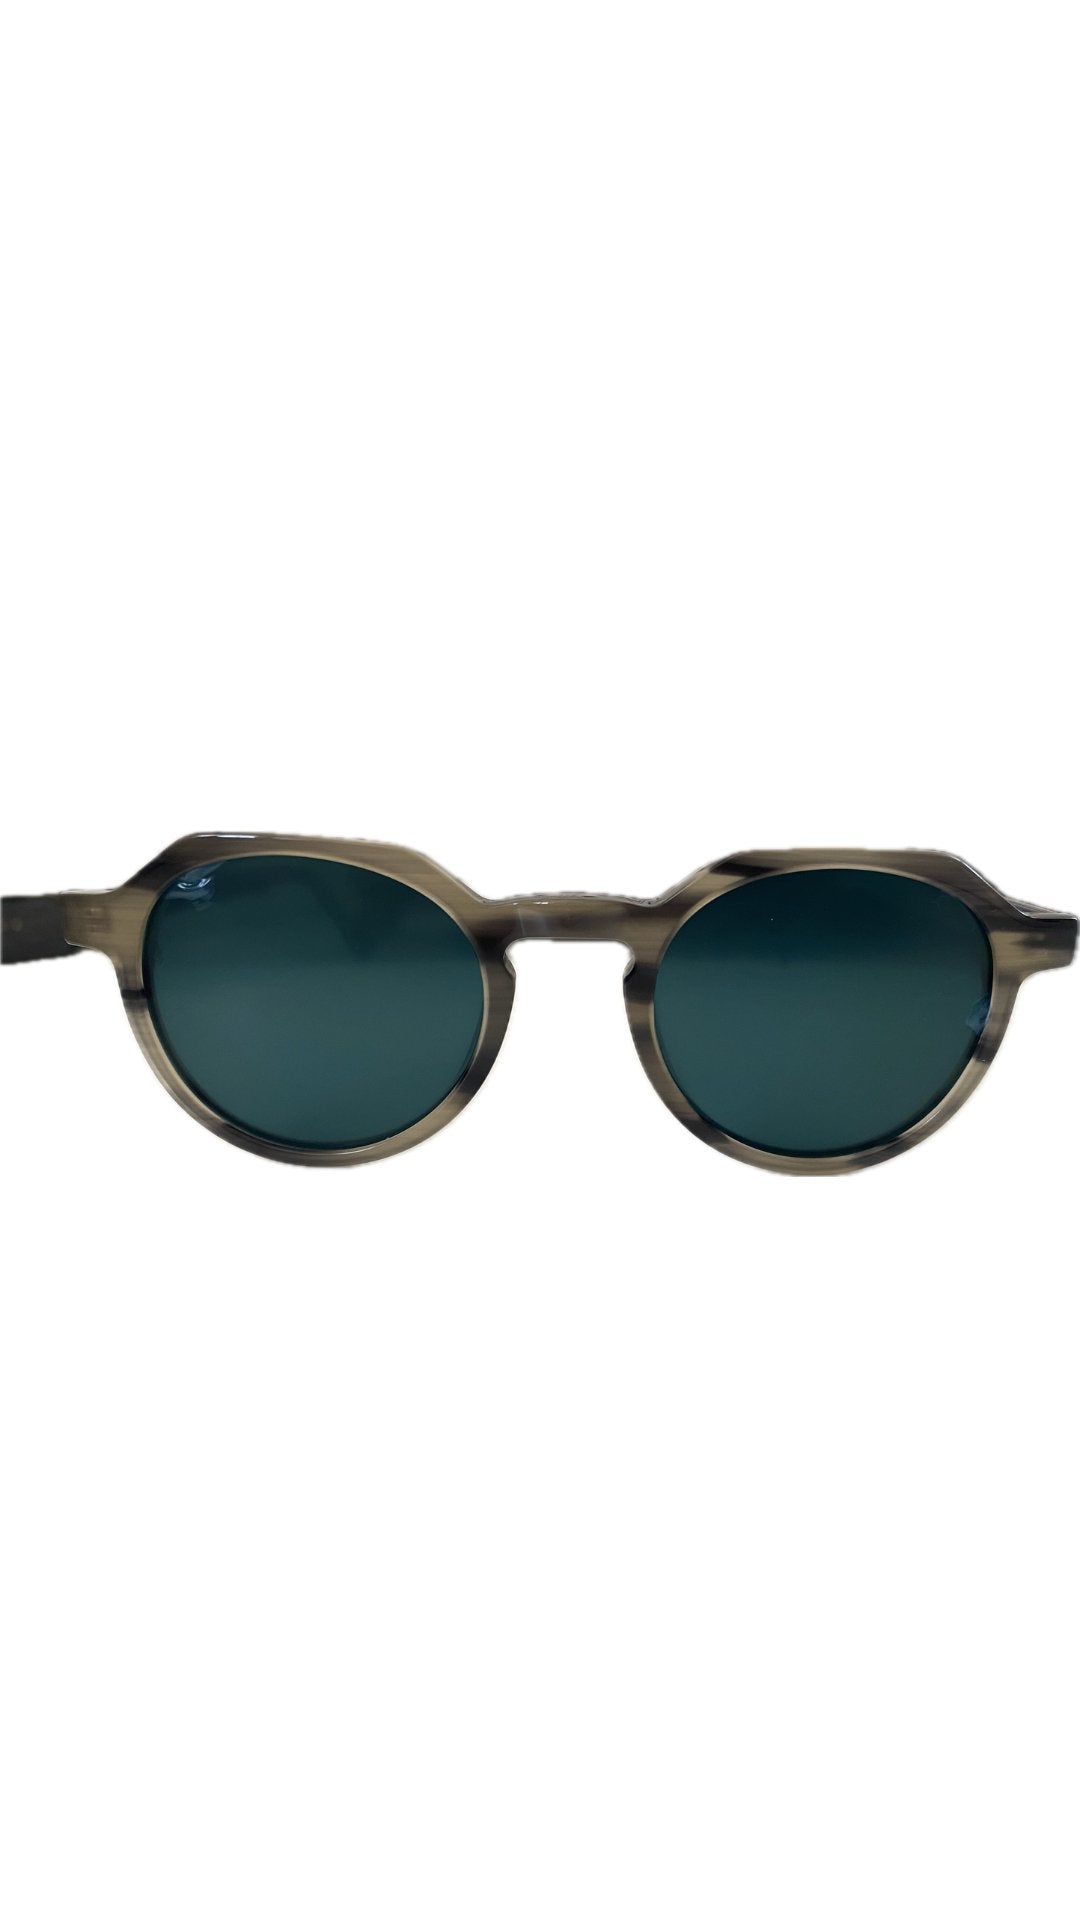 Charcoal retro sunglasses Acetate Frame Glasses Polarized - Eques Timepieces